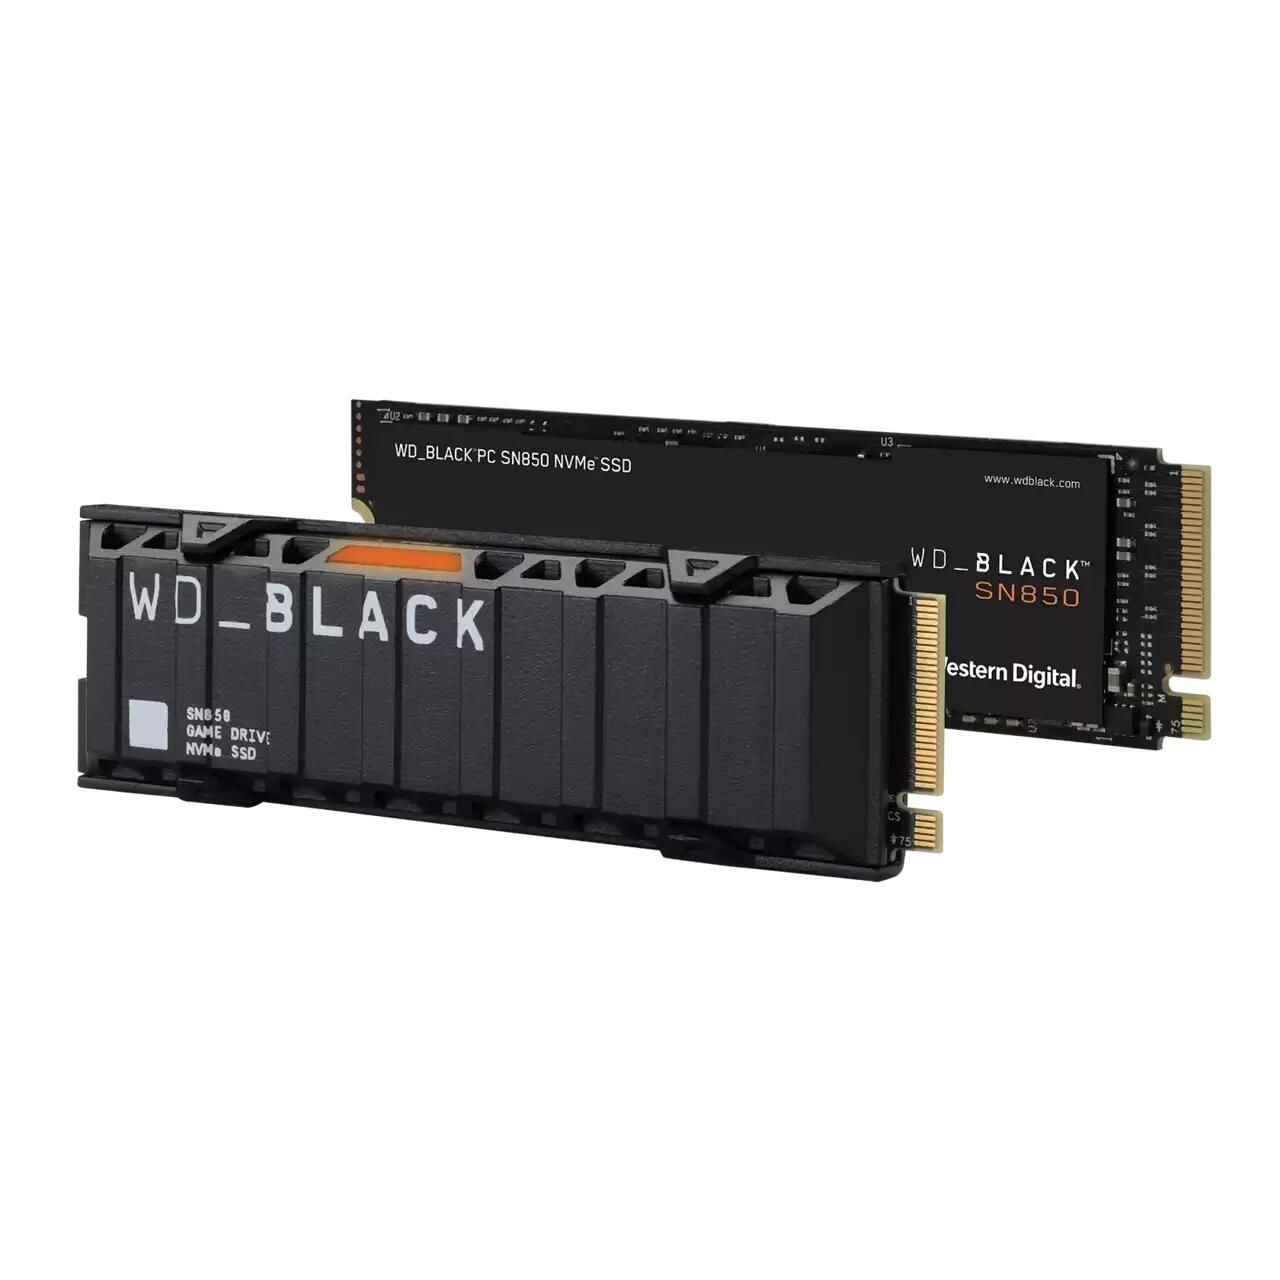 WD_BLACK™ SN850 SSD - 500 GB